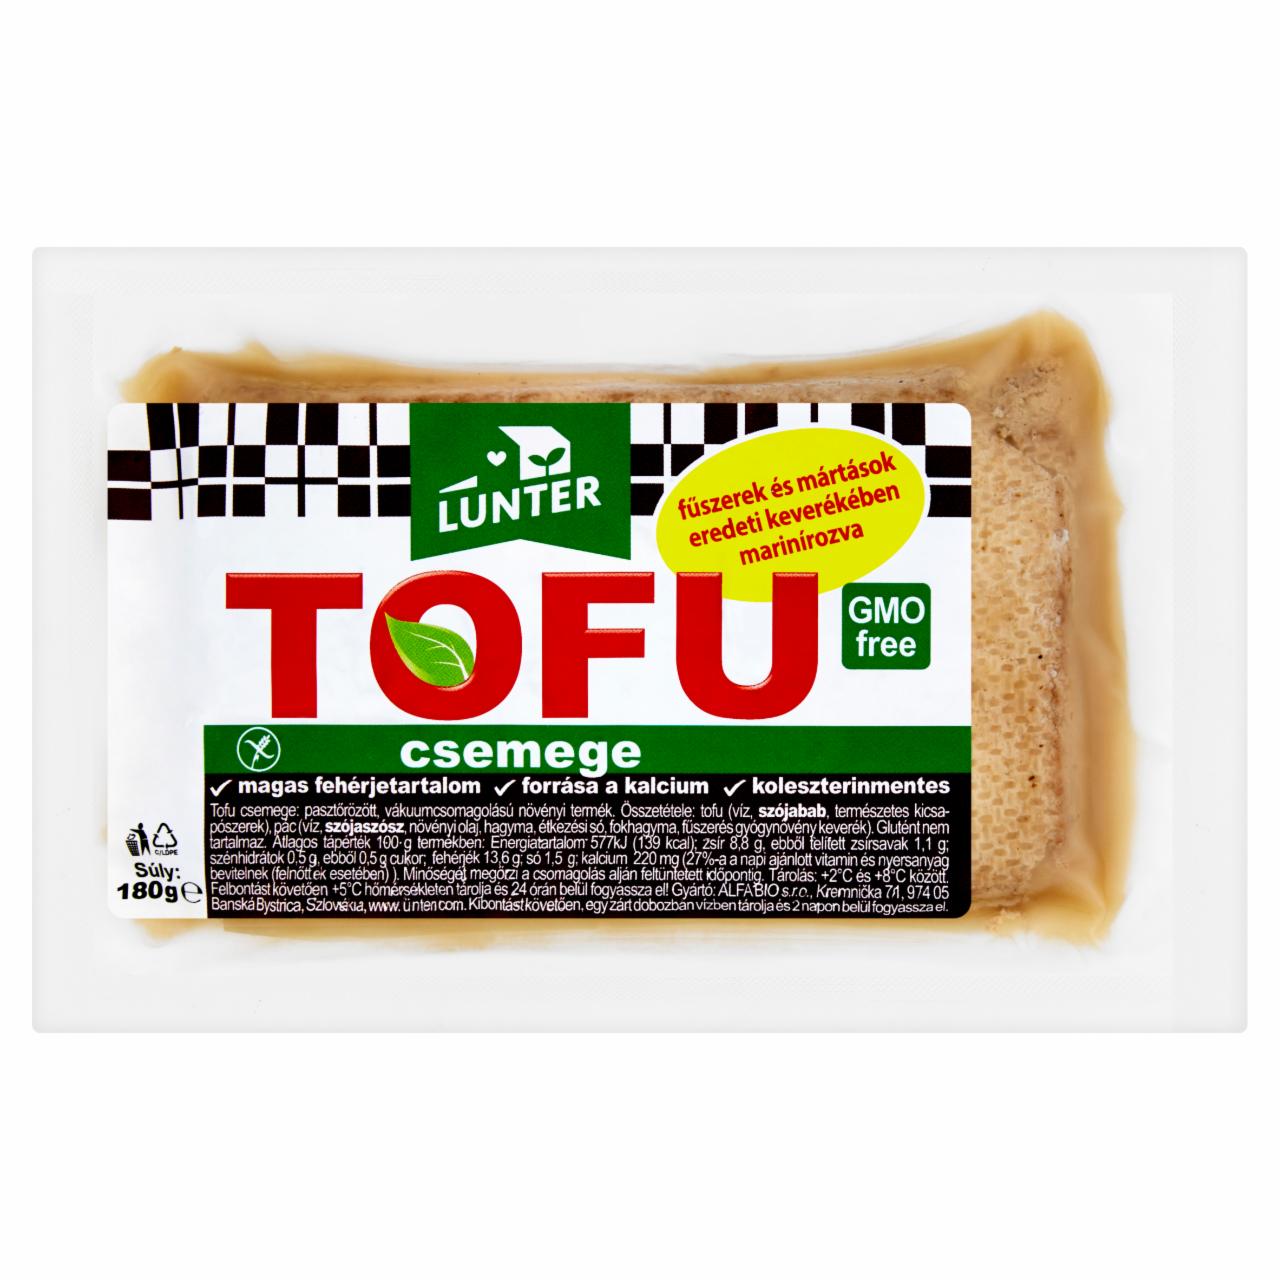 Képek - Lunter gluténmentes csemege tofu 180 g